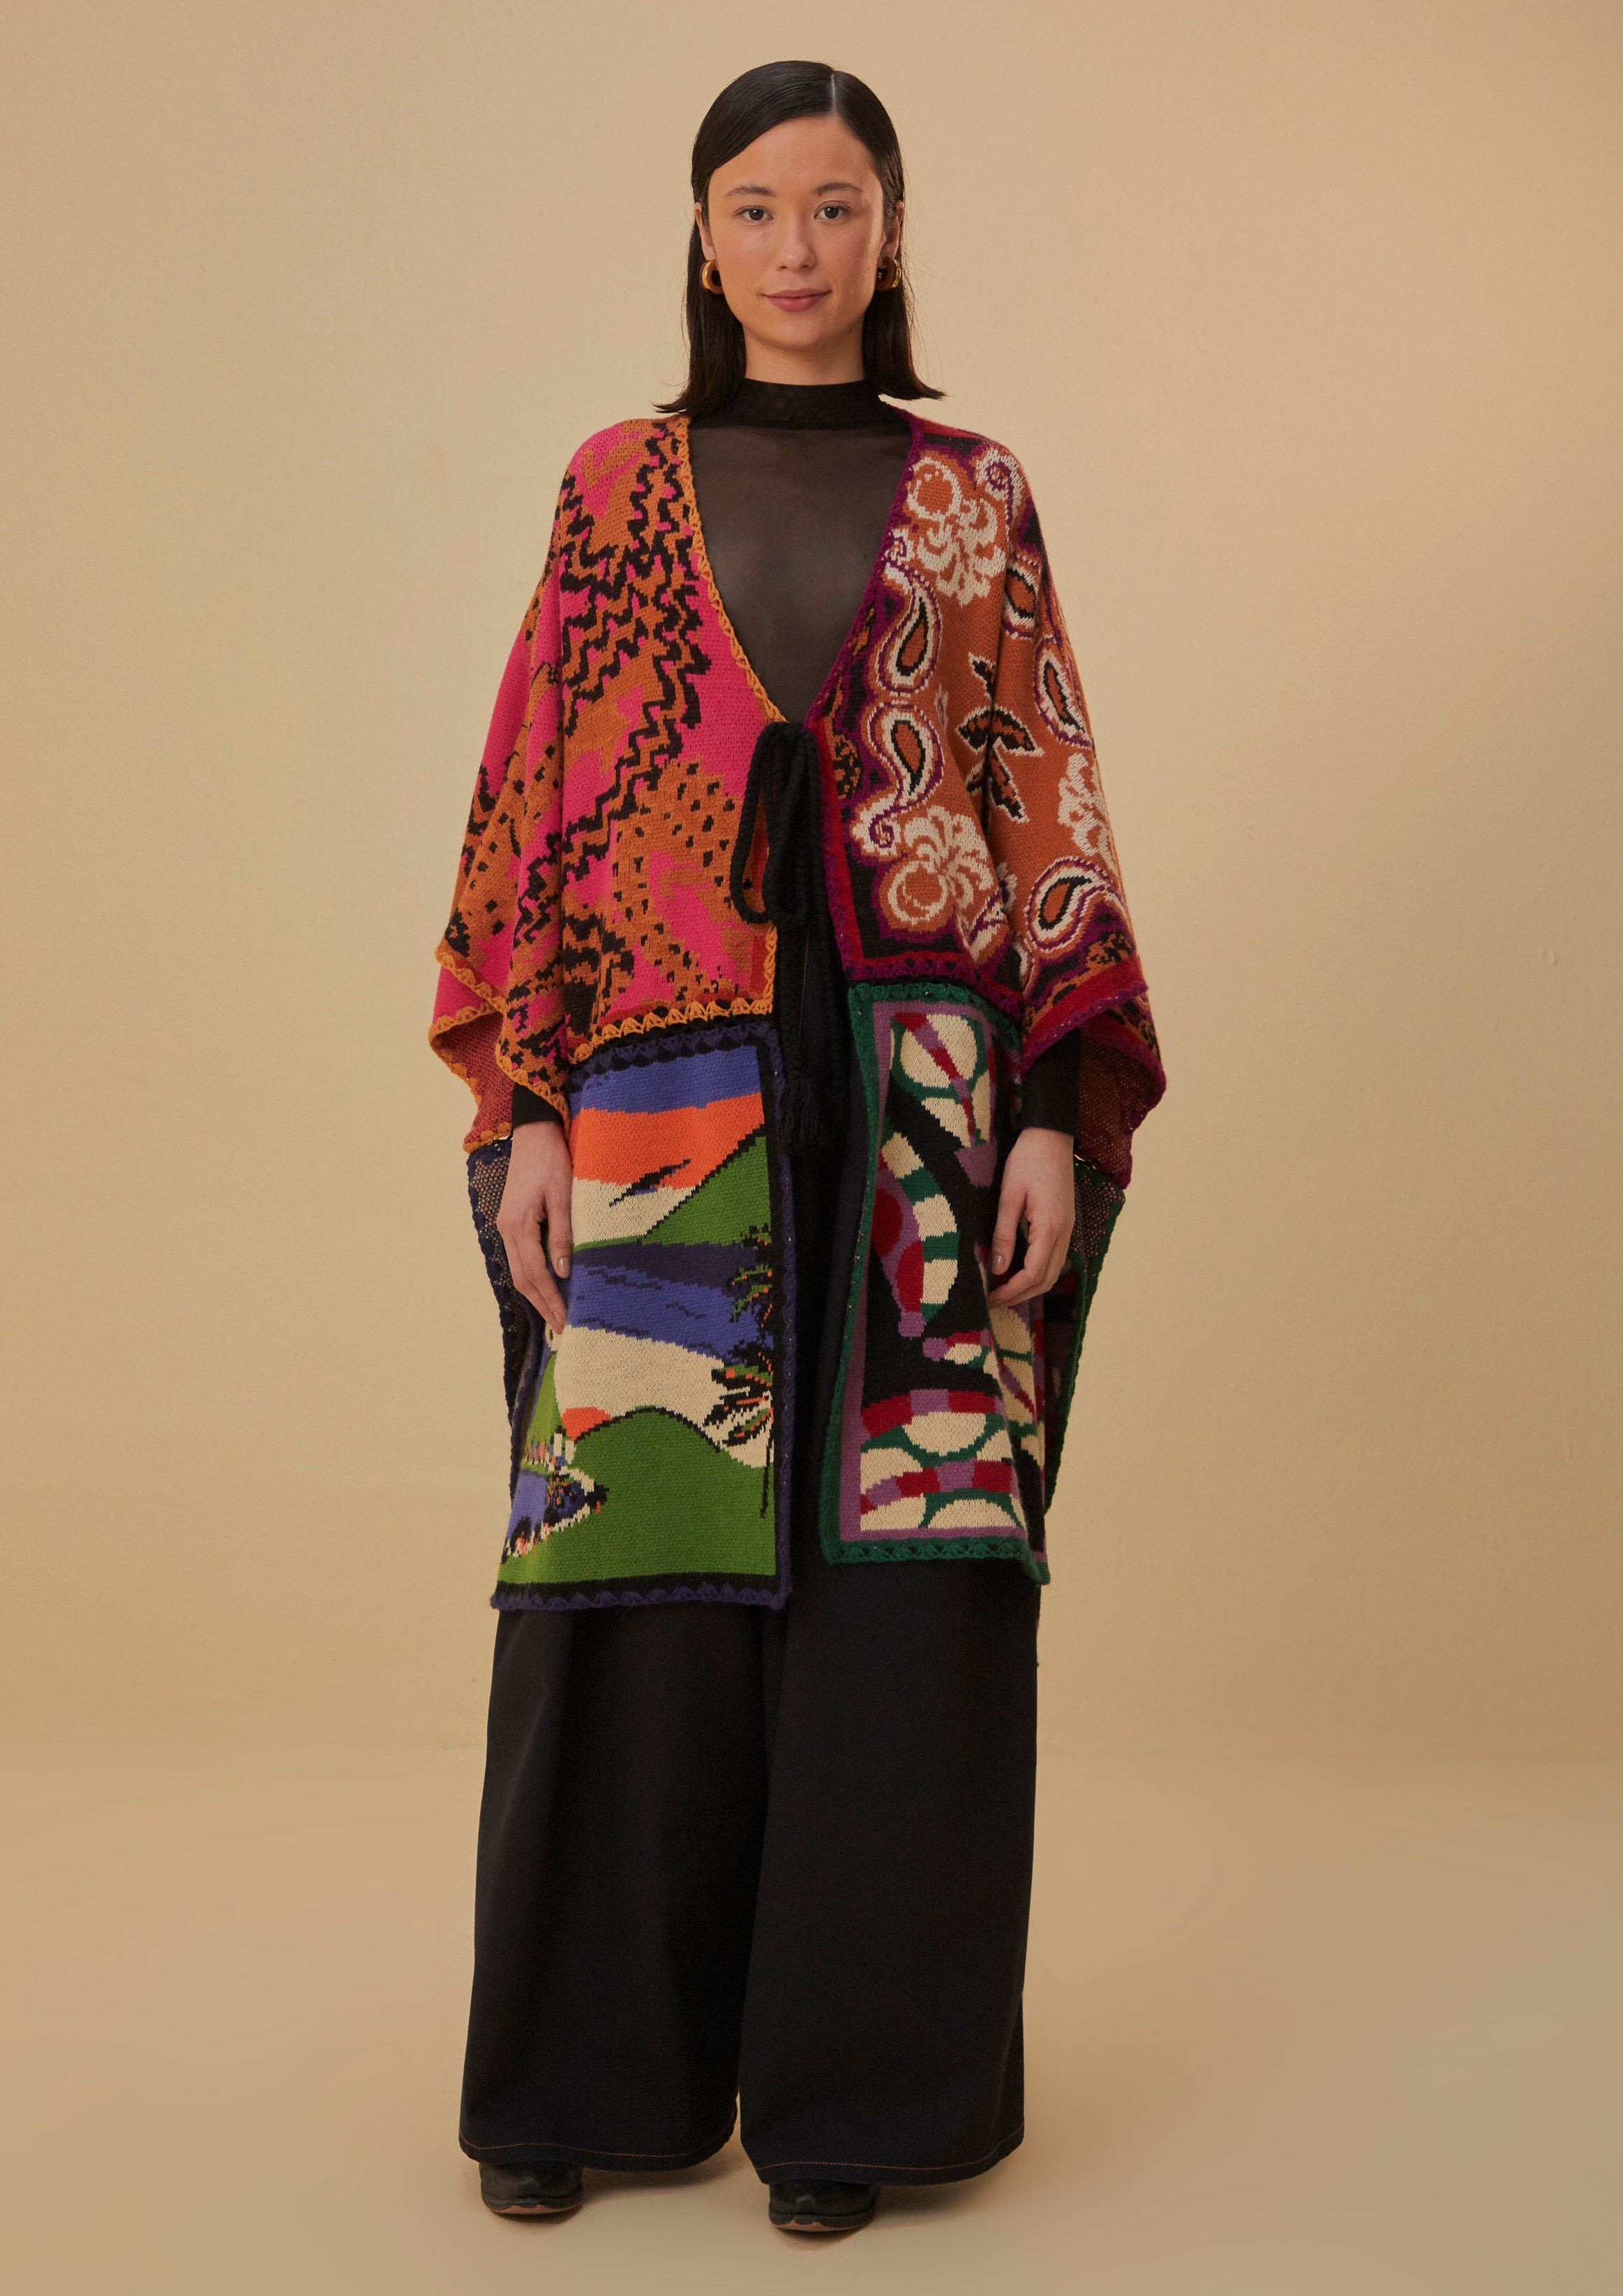 Mixed Prints Knit Kimonoa